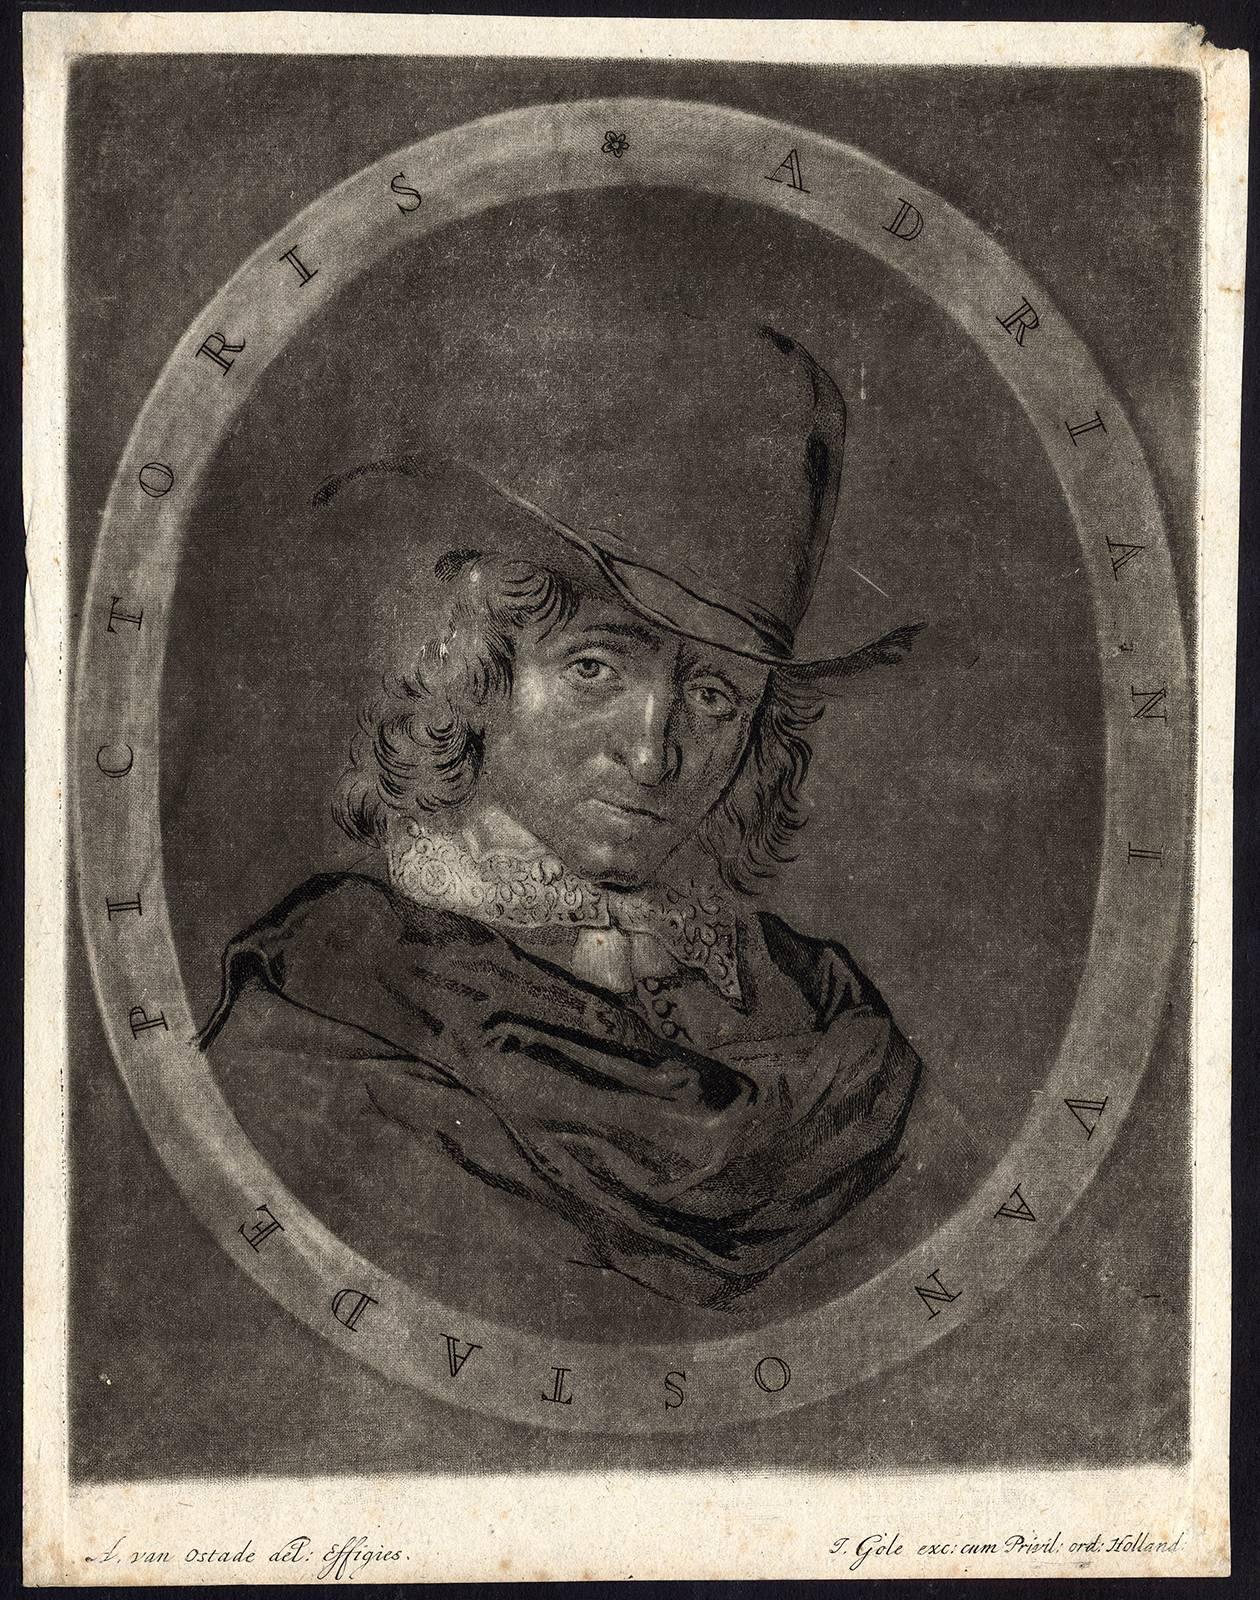 Jacob Gole Portrait Print - Adriani van Ostade pictoris - the Dutch painter Adriaen van Ostade.